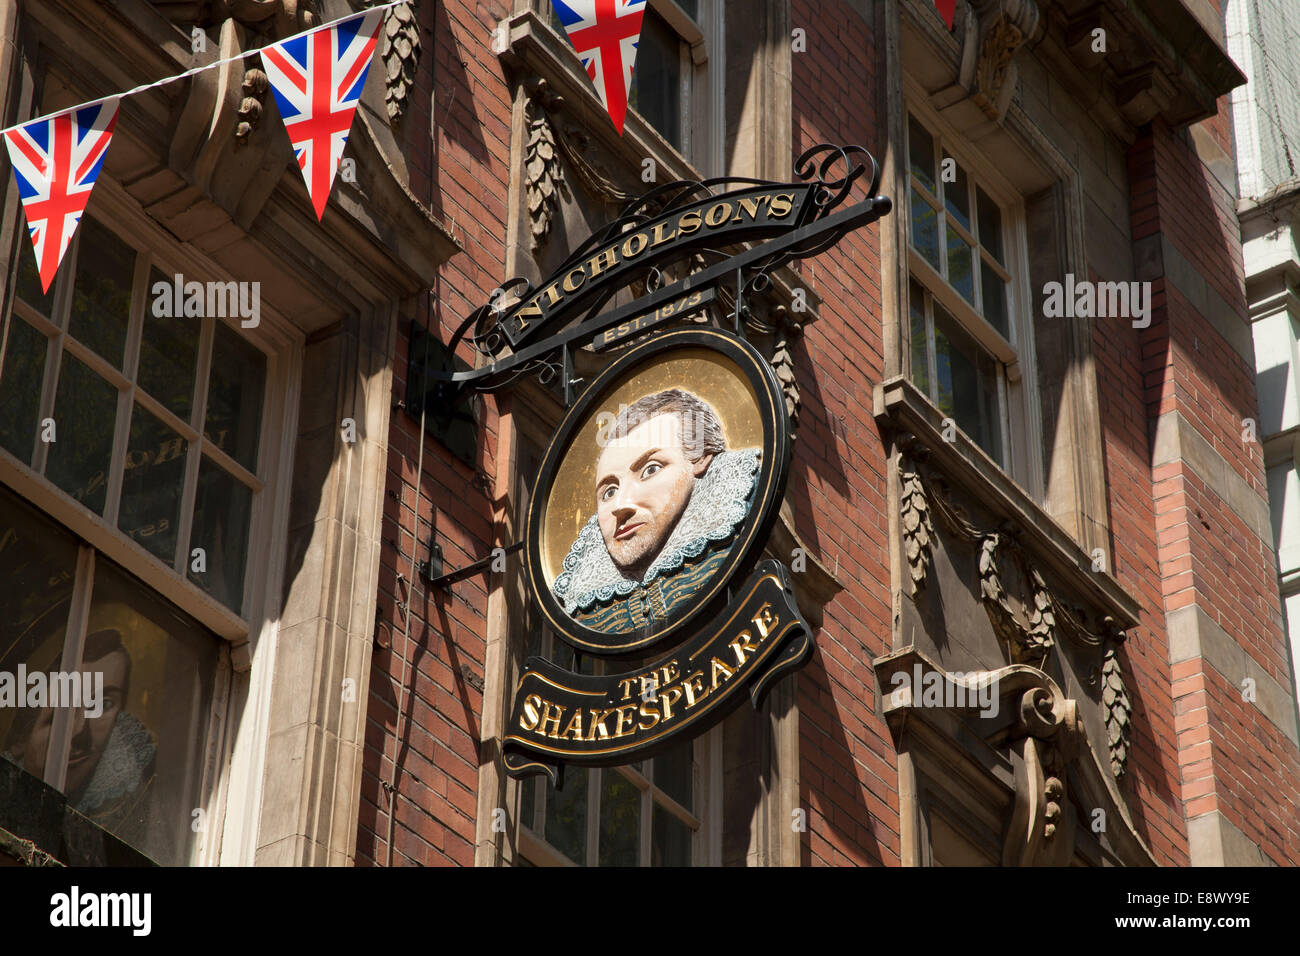 The sign of The Shakespeare pub, Birmingham, UK Stock Photo